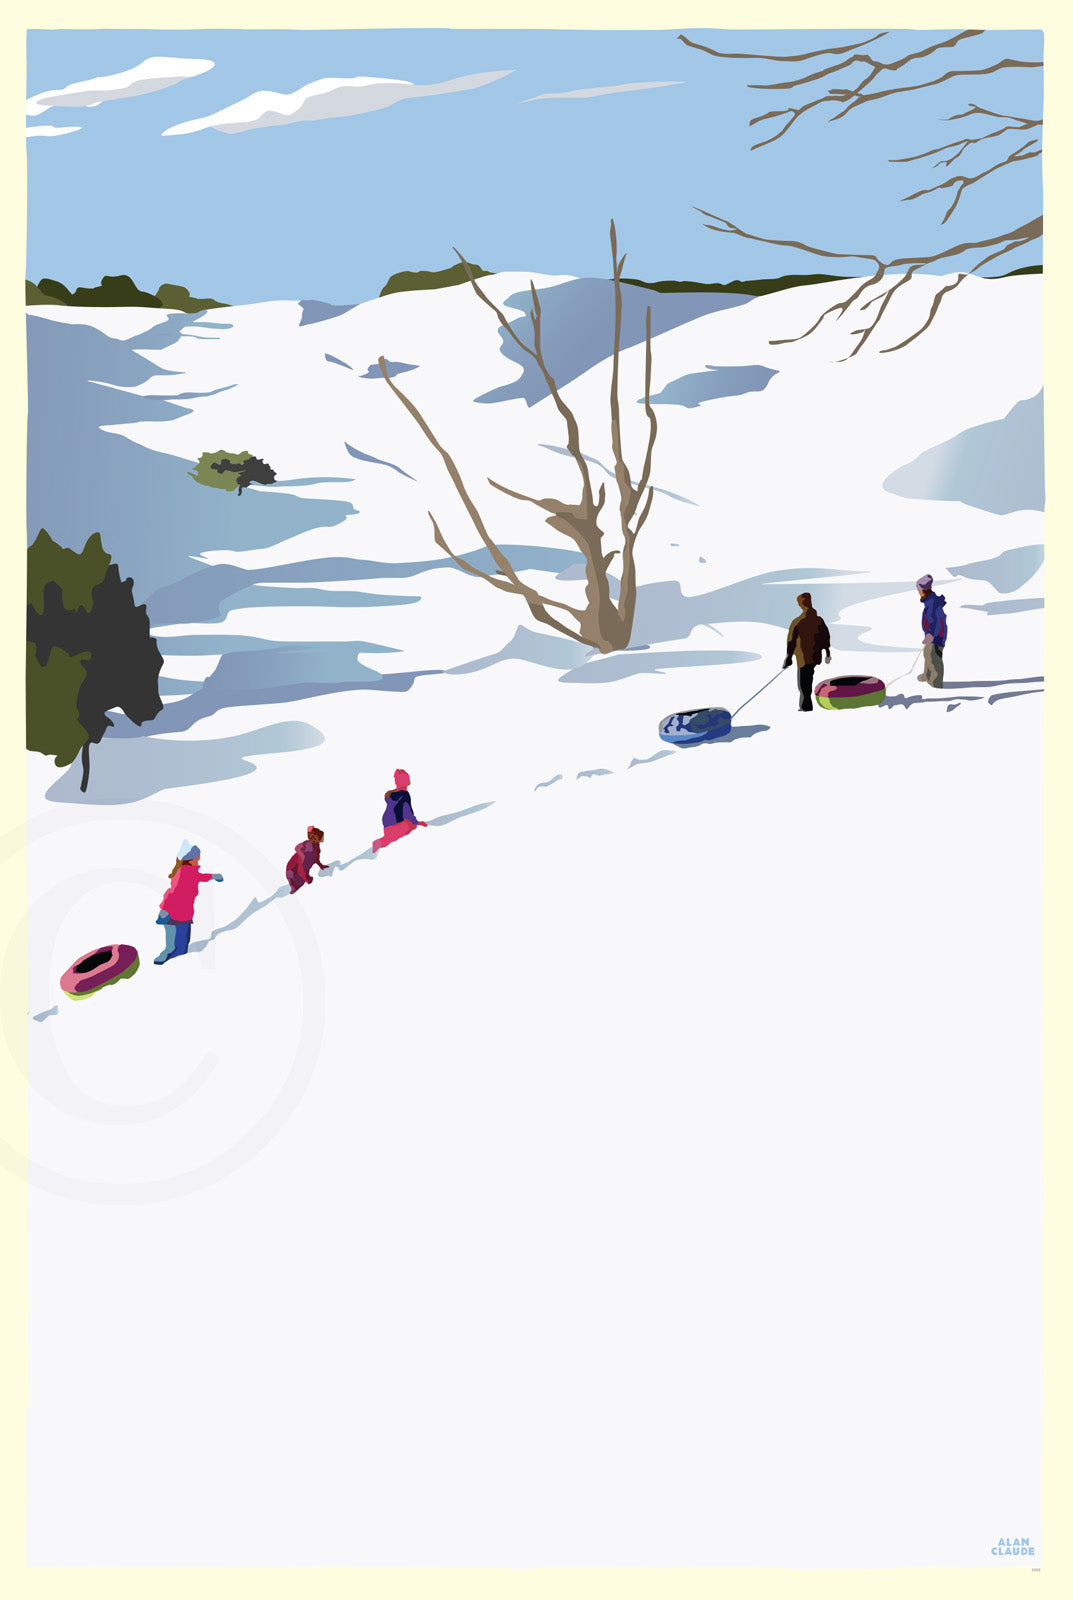 Snow Kids Art Print 24" x 36" Wall Poster By Alan Claude - Maine